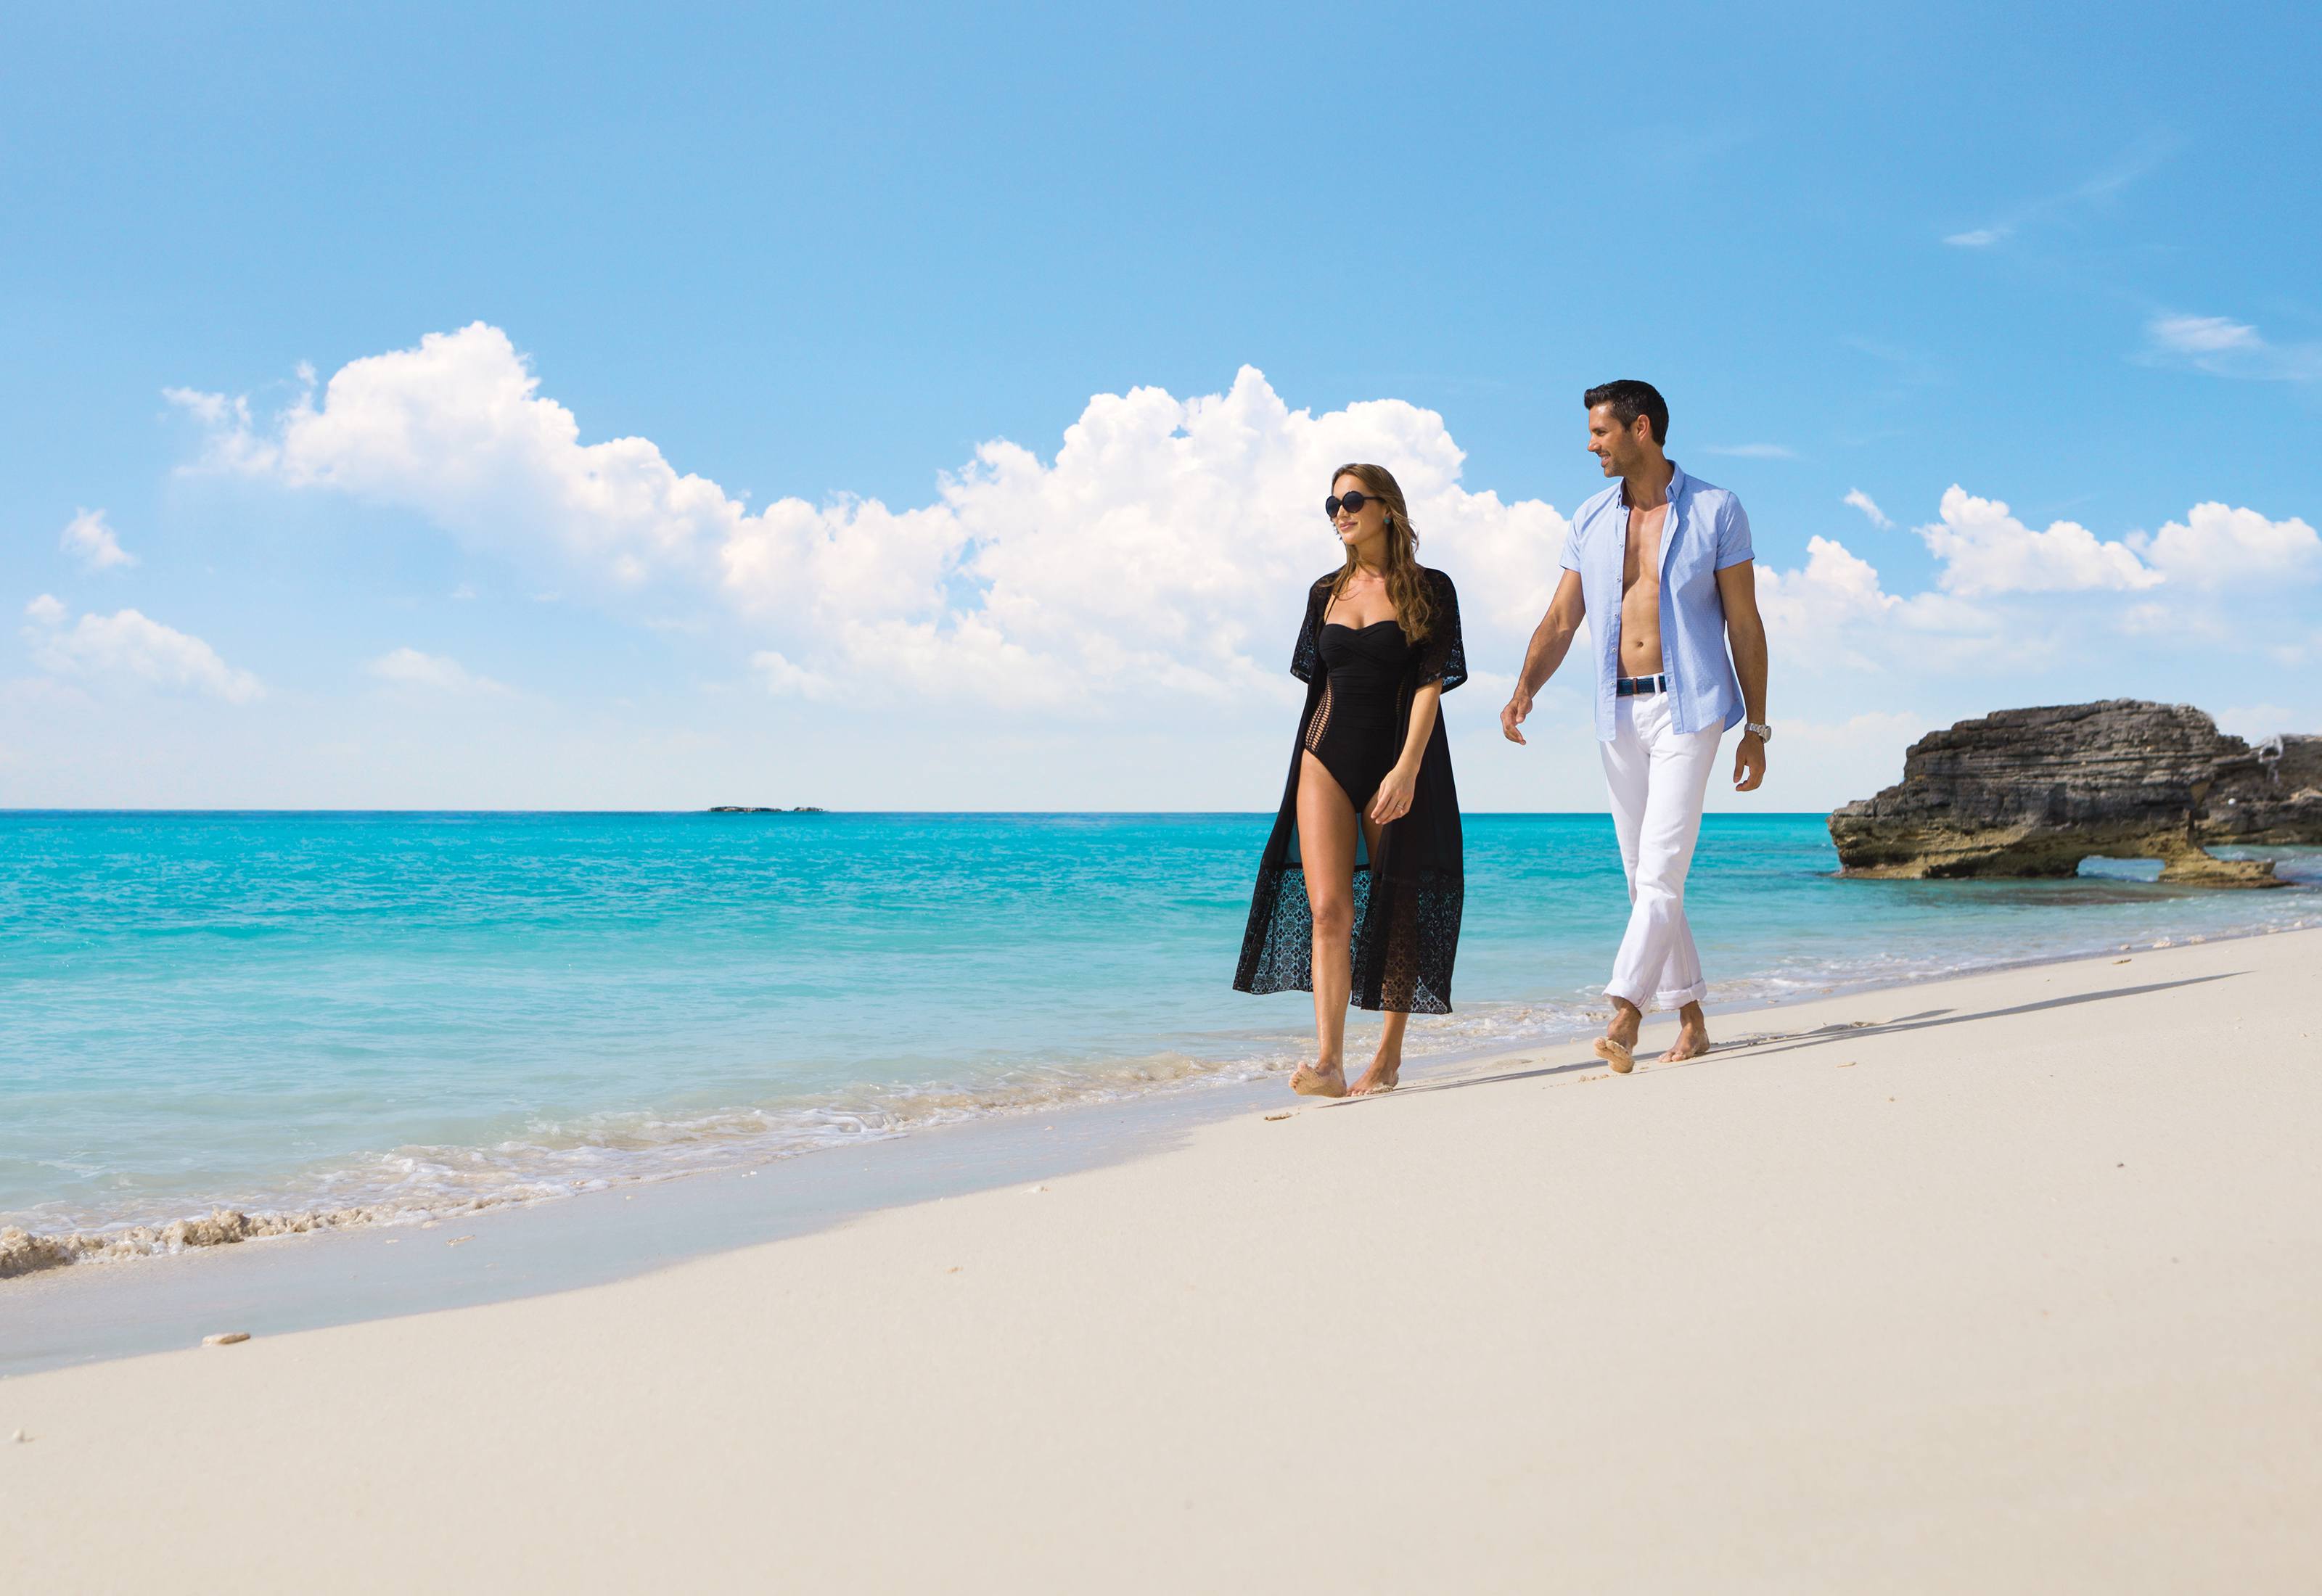 Bimini Bahamas Beaches | Resorts World Bimini